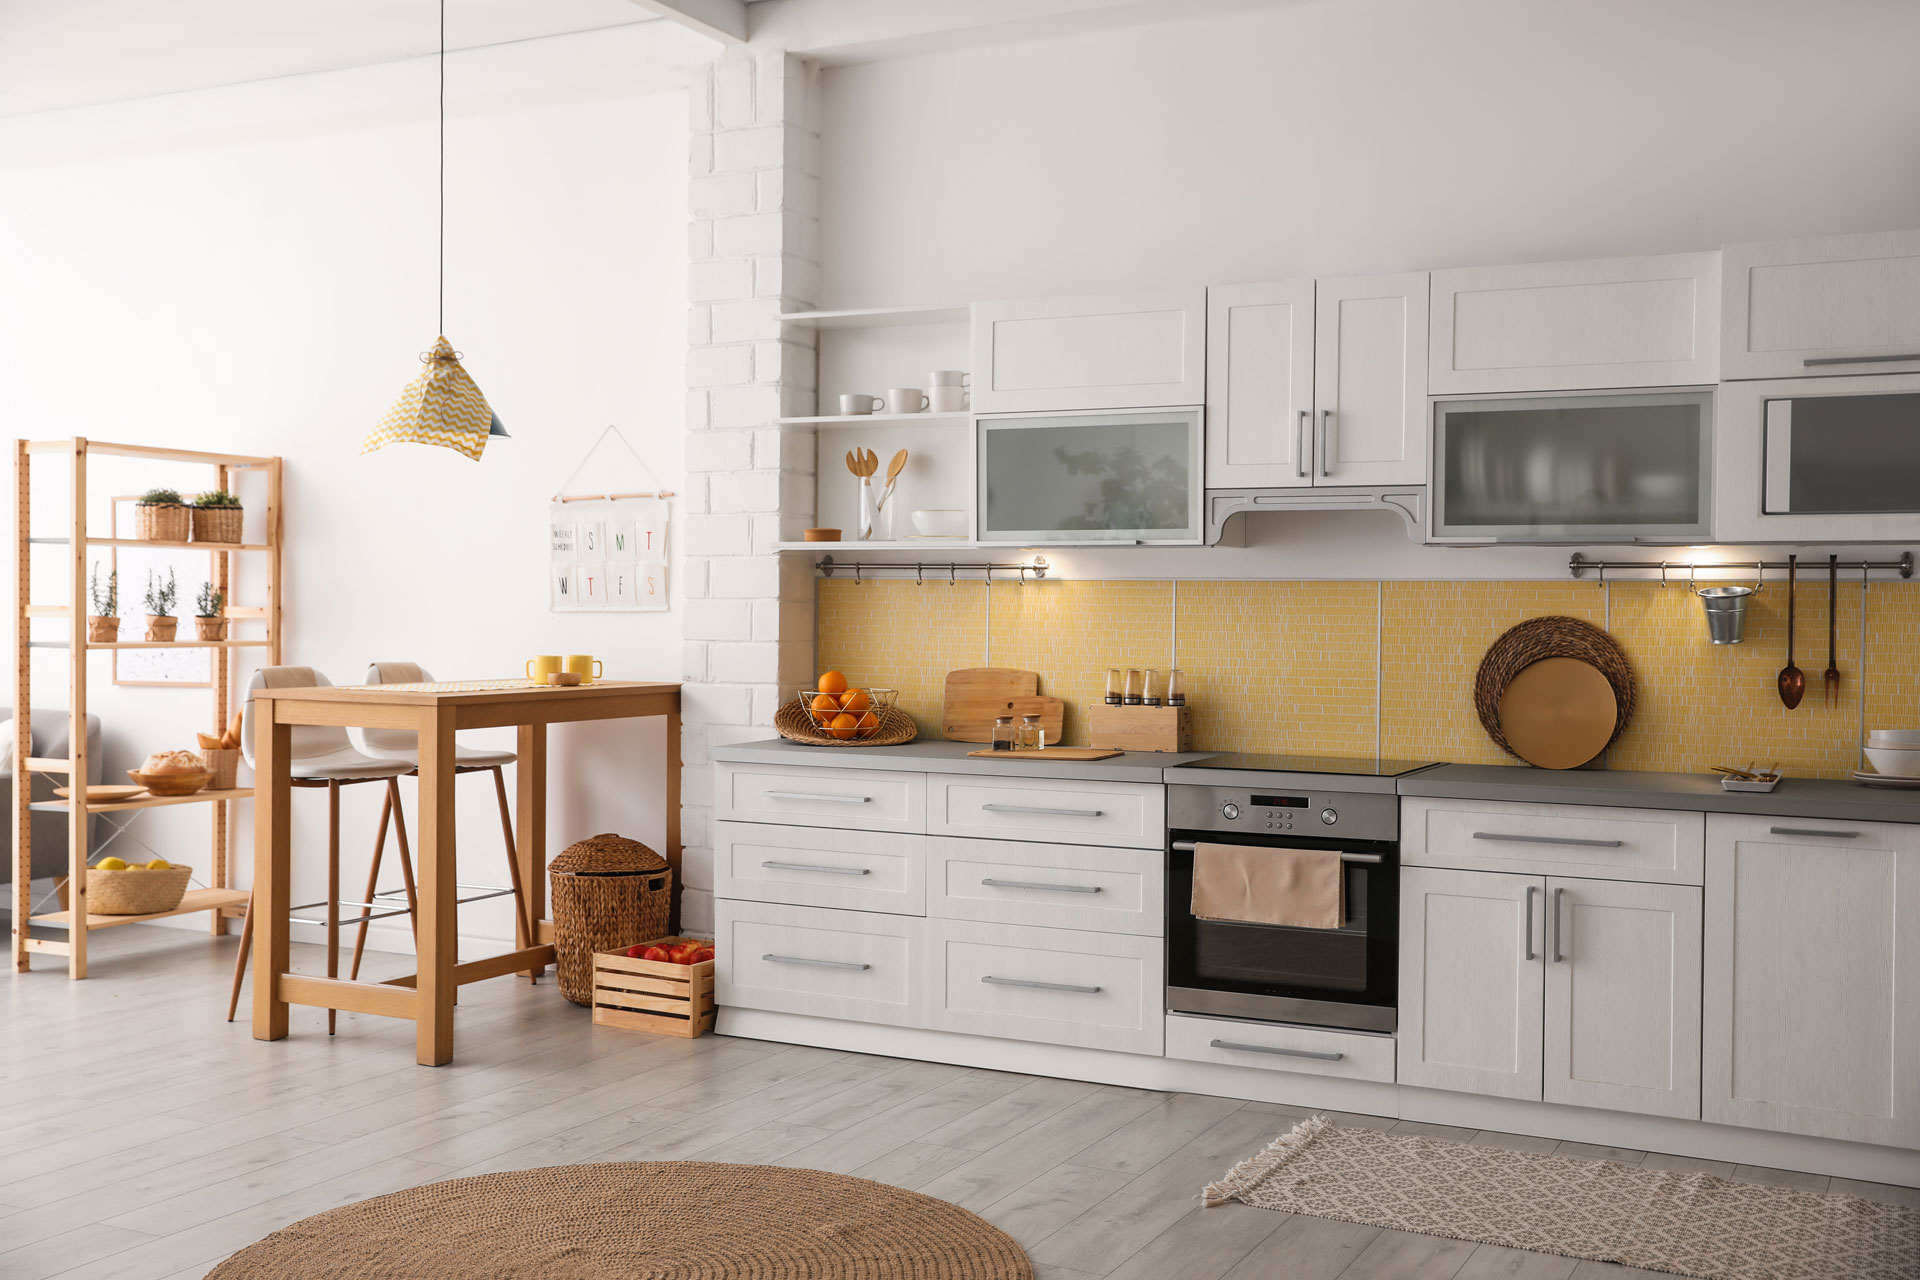 open concept kitchen remodel